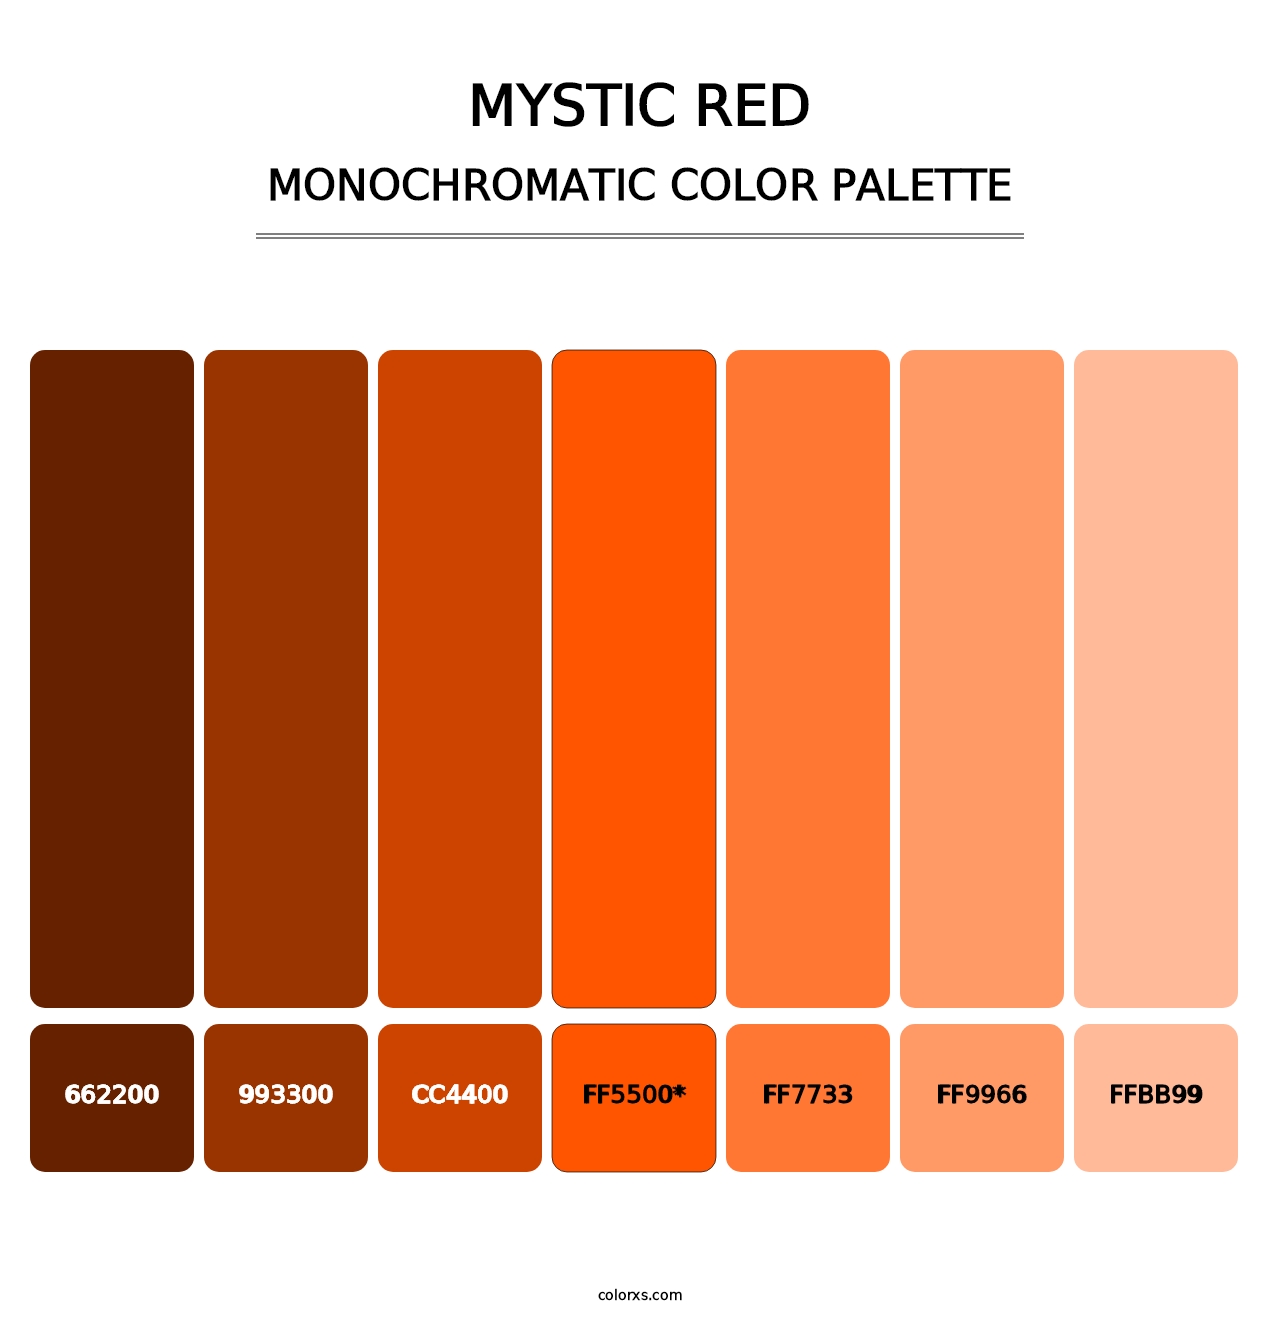 Mystic Red - Monochromatic Color Palette